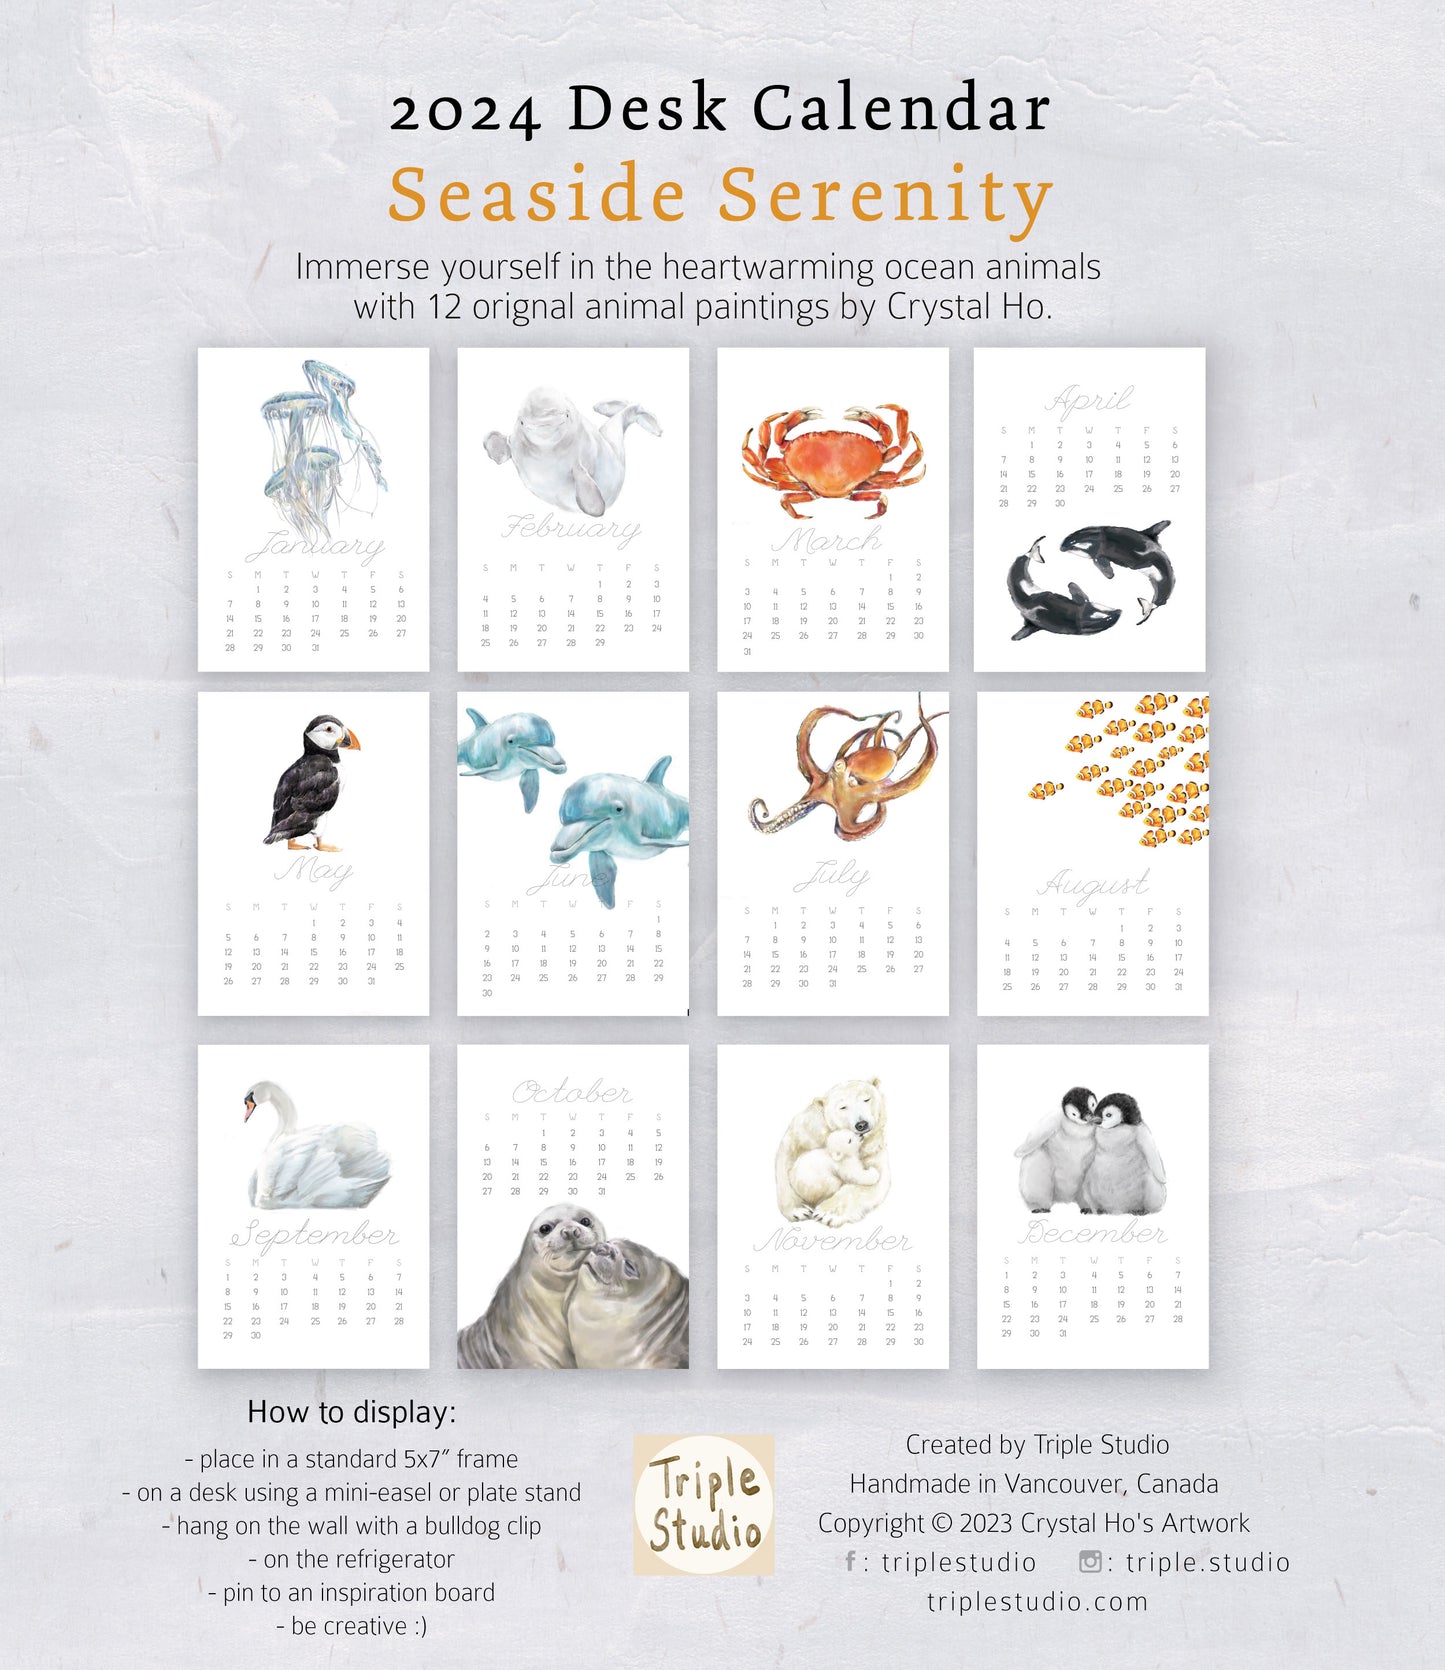 2024 Desk Calendar: Seaside Serenity